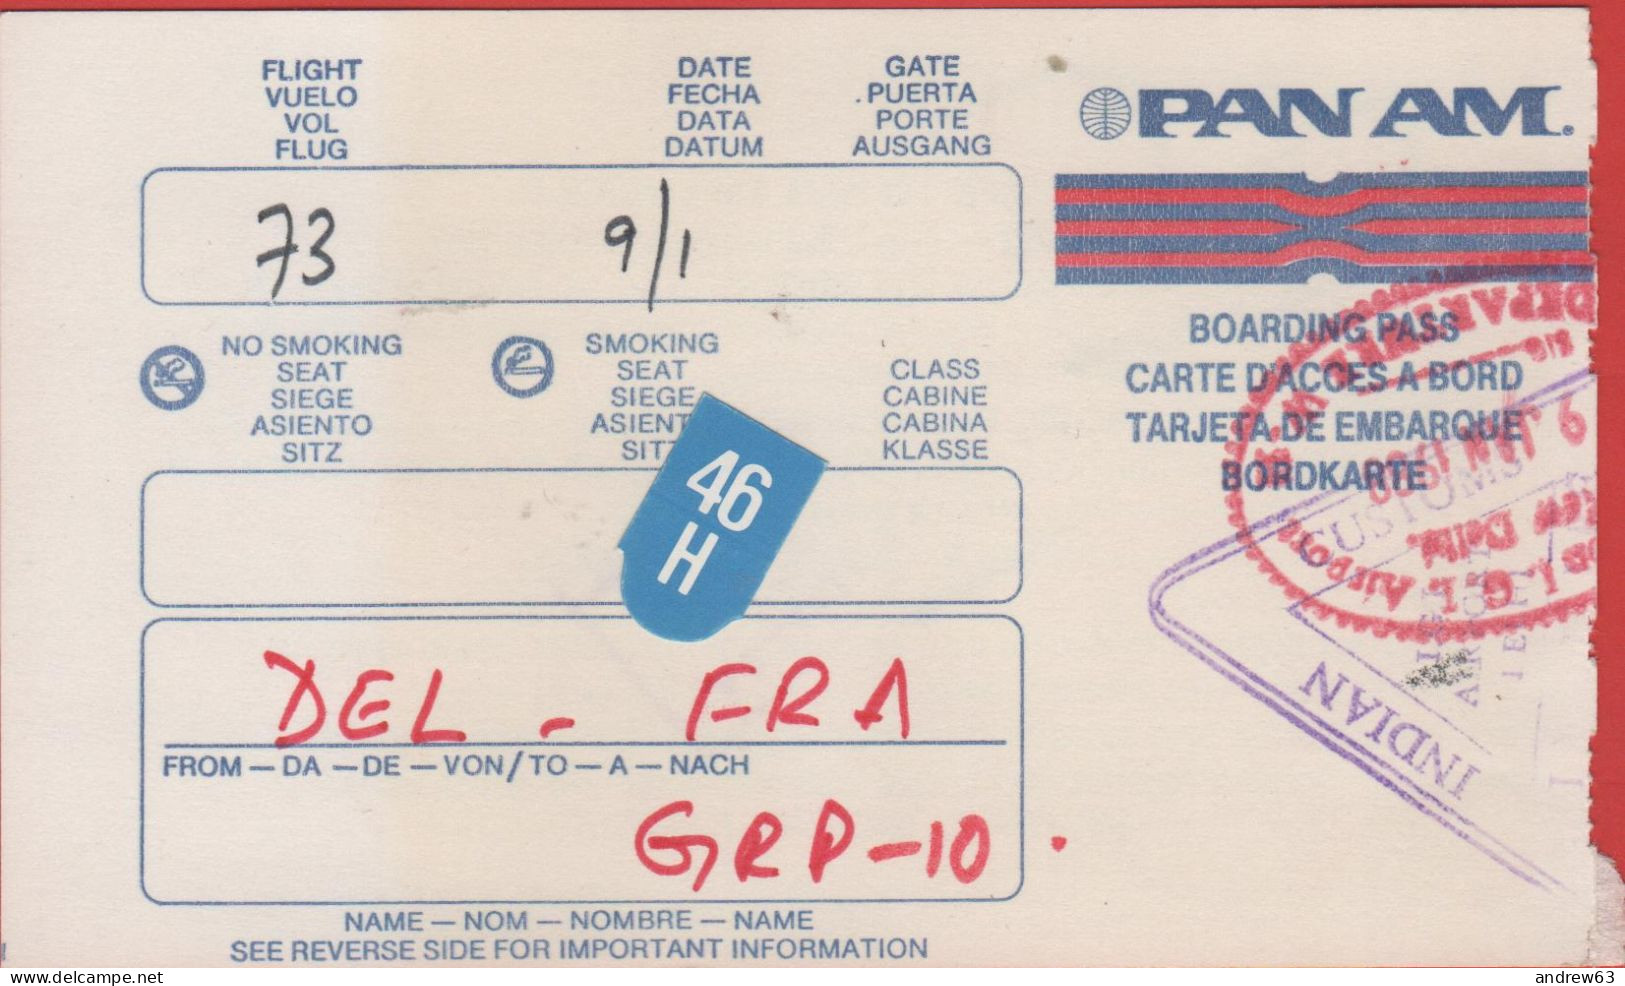 USA - PAN AM - DEL-FRA - Carta D'Imbarco - Boarding Pass - Wereld